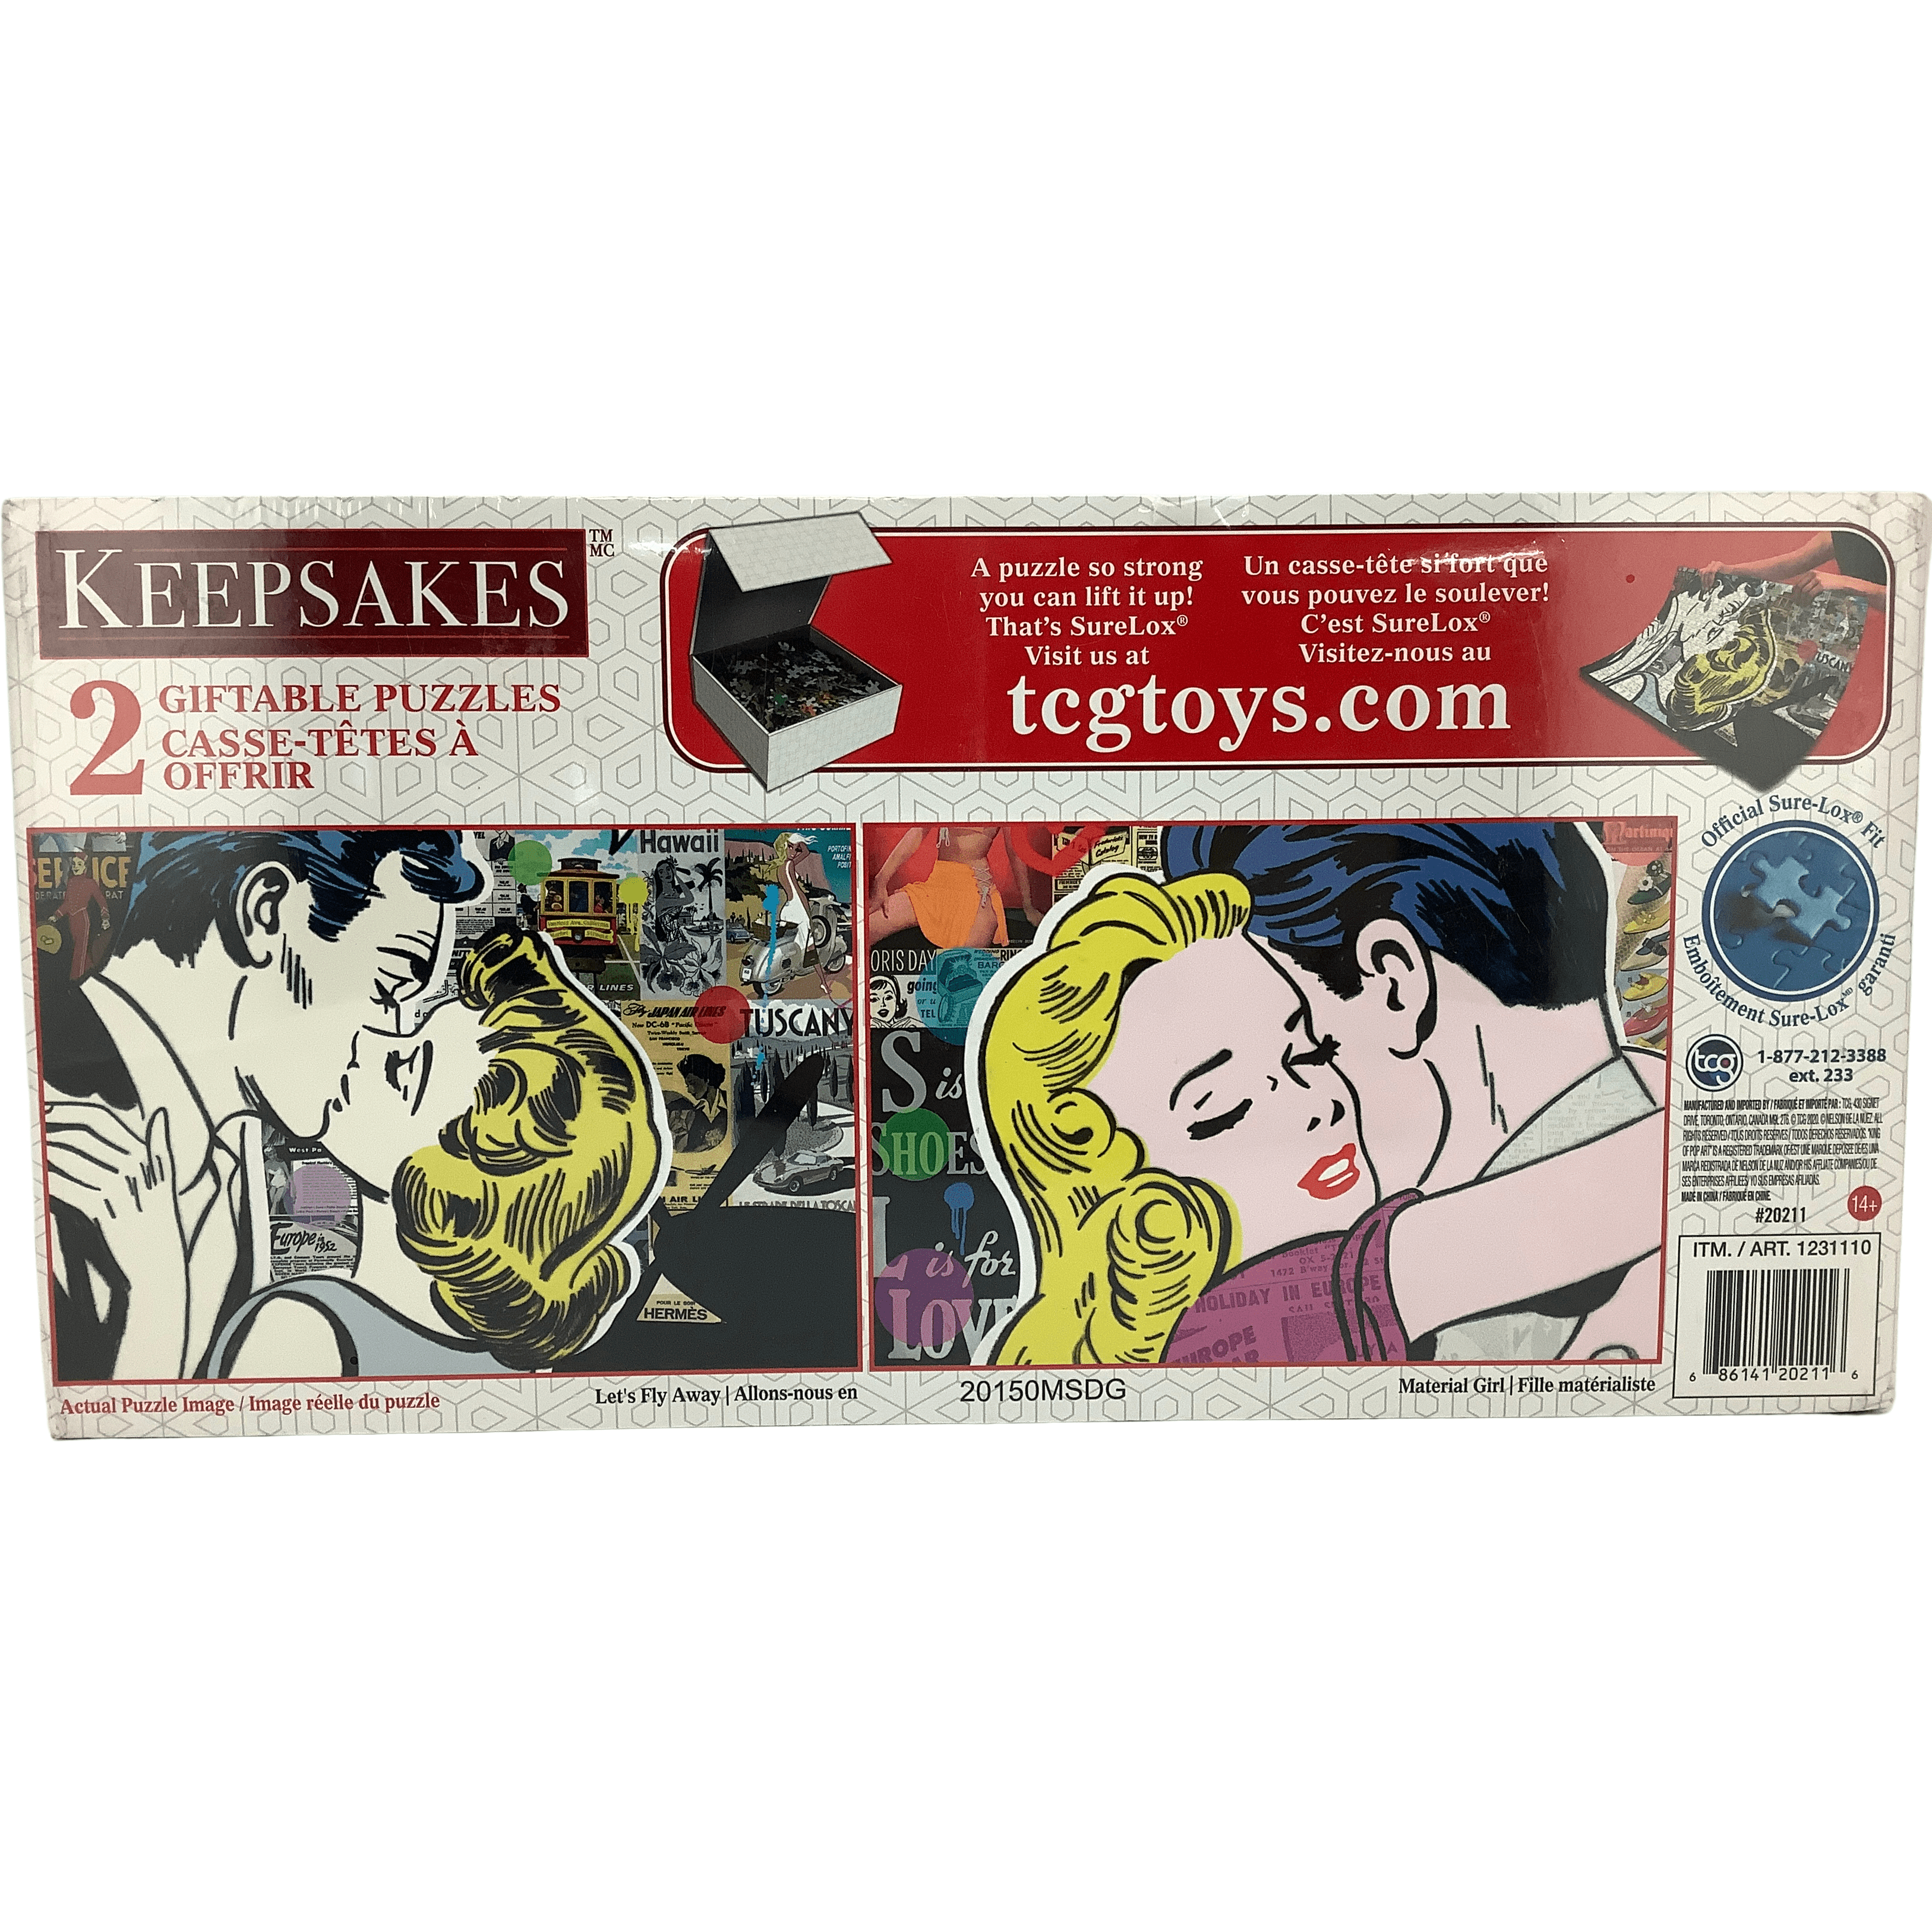 Keepsakes Pop Art Puzzles / 500 Piece / 2 Pack / Giftable Puzzles